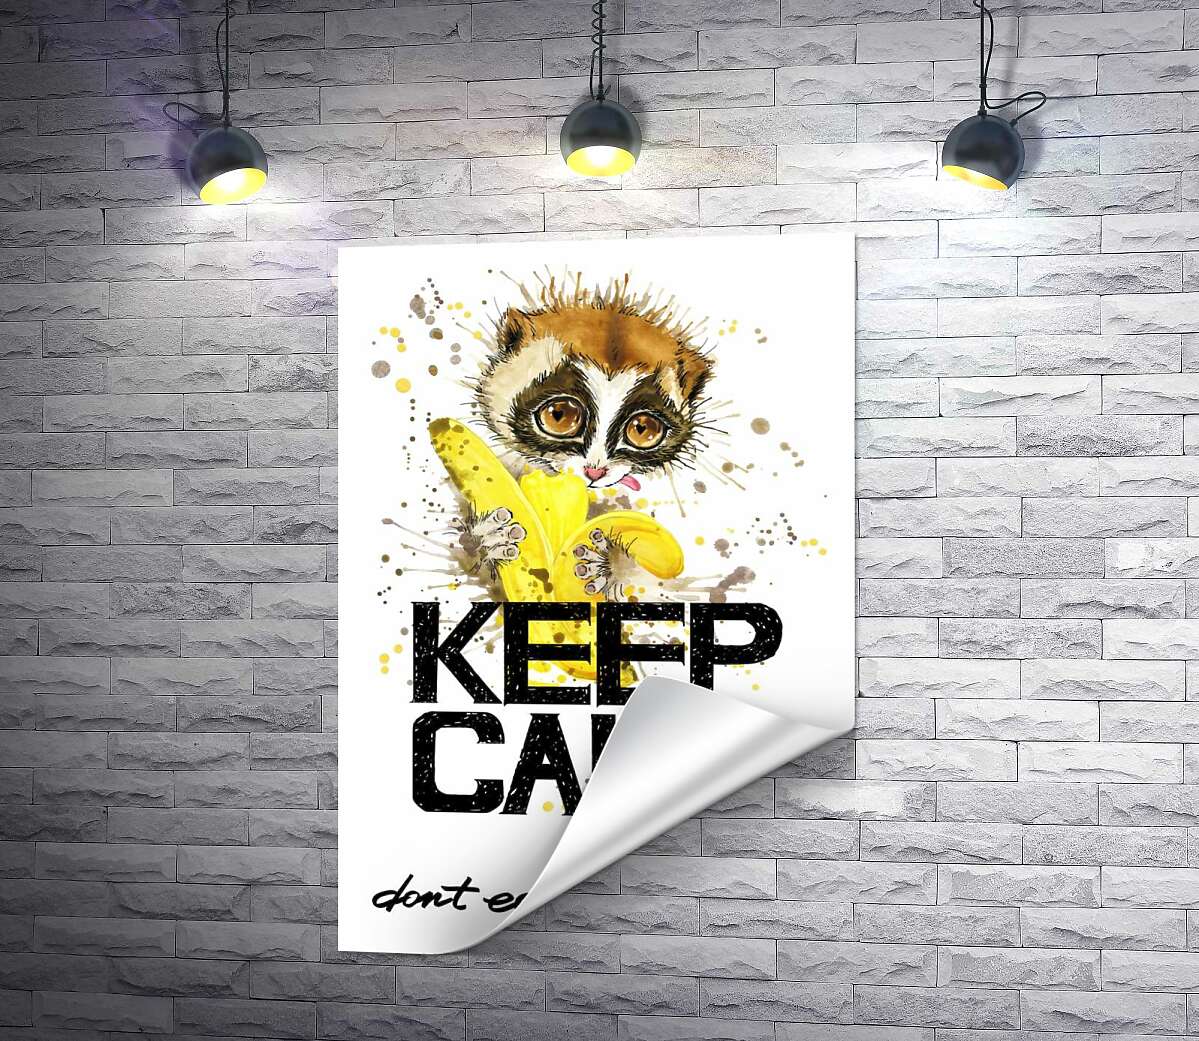 друк Маленький лемур їсть банан над написом "keep calm and don't eat after 6 p.m."